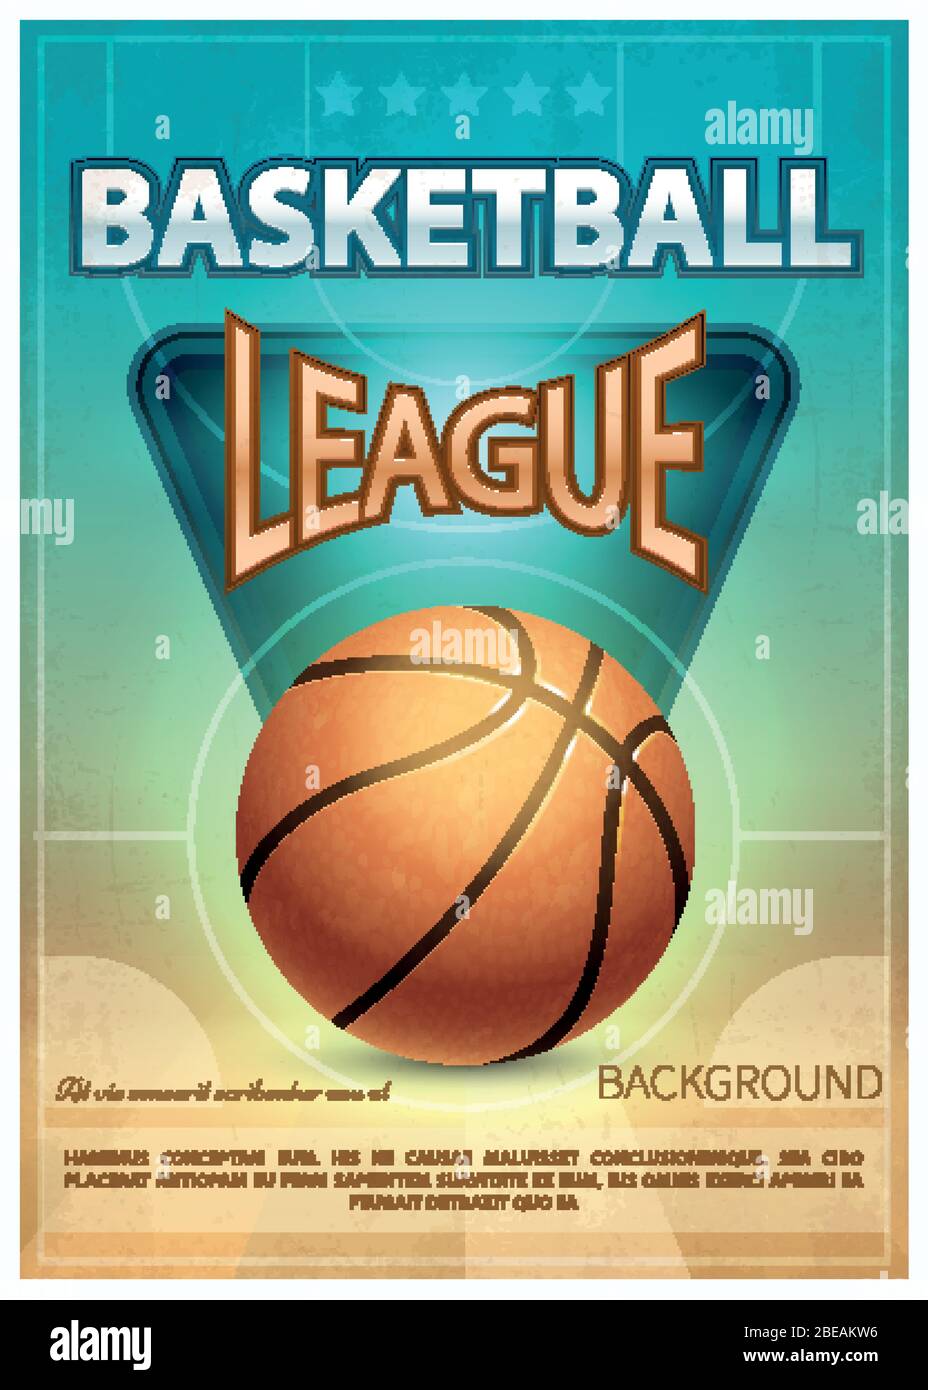 Vecteur Stock Basketball Poster Vector. Banner Advertising. Sport Event  Announcement. Announcement, Game, League, Camp Design. Championship  Illustration